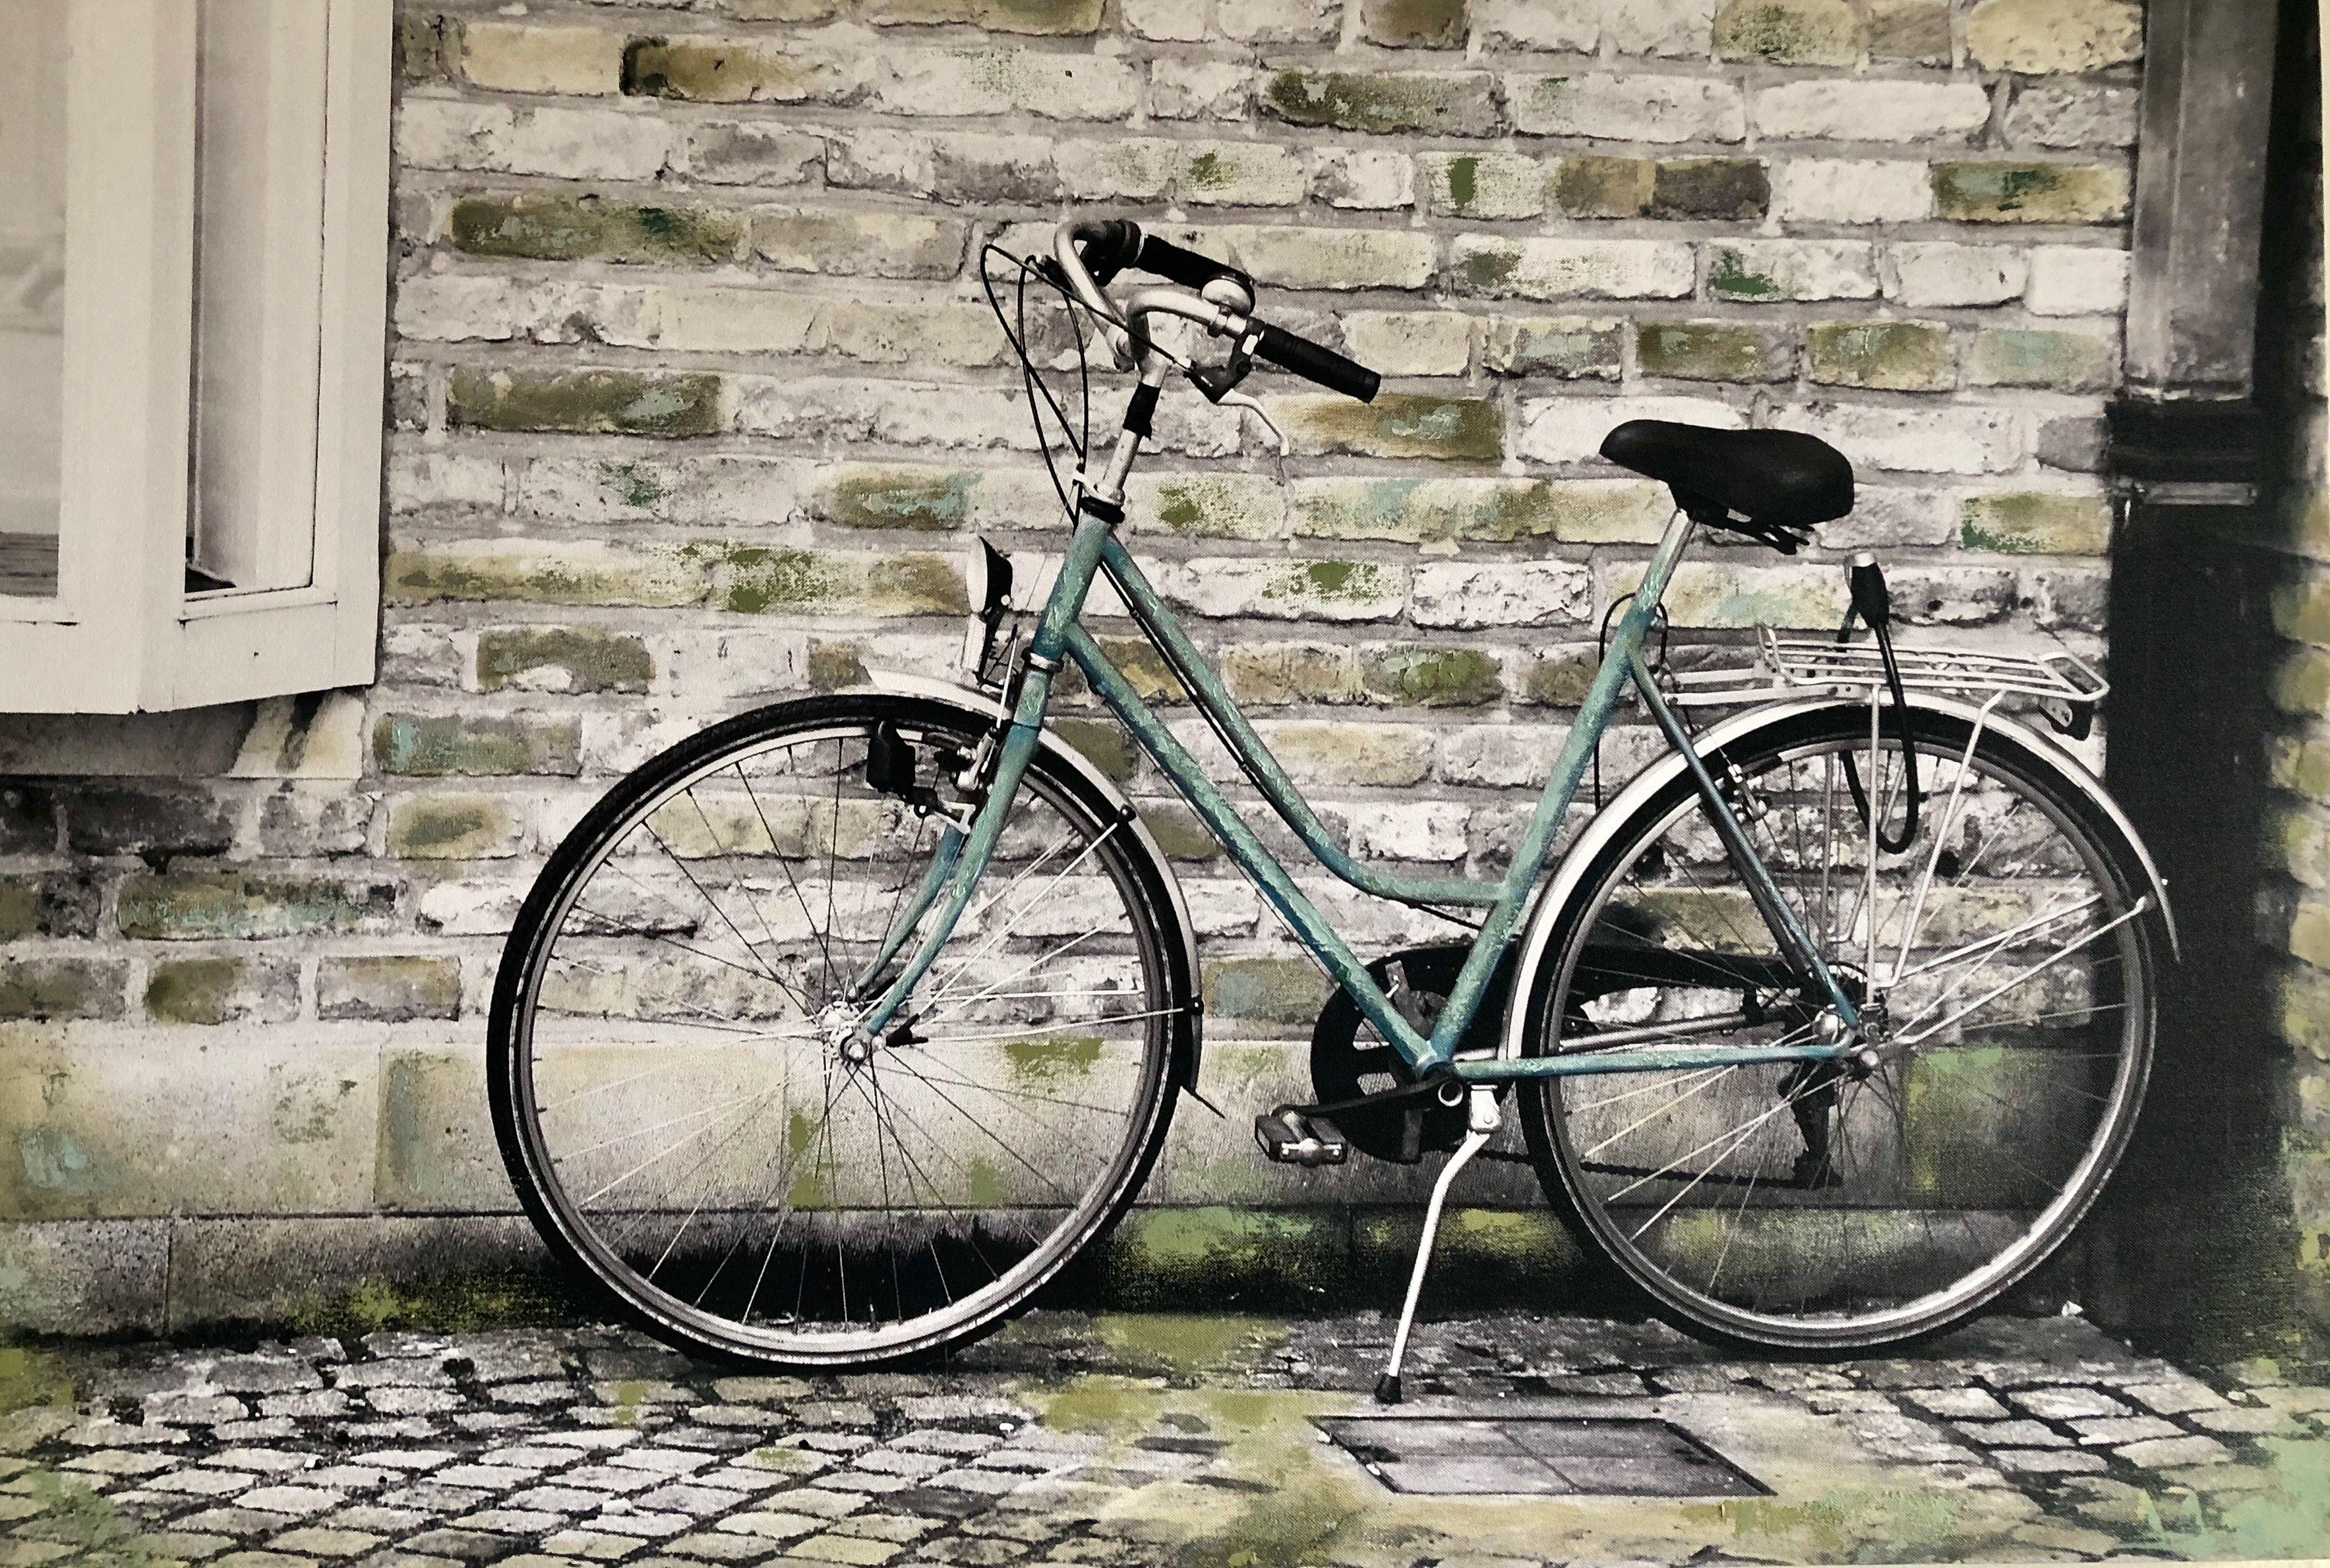 Bike Expressions, Mixed Media on Canvas - Mixed Media Art by Sofia Barroso